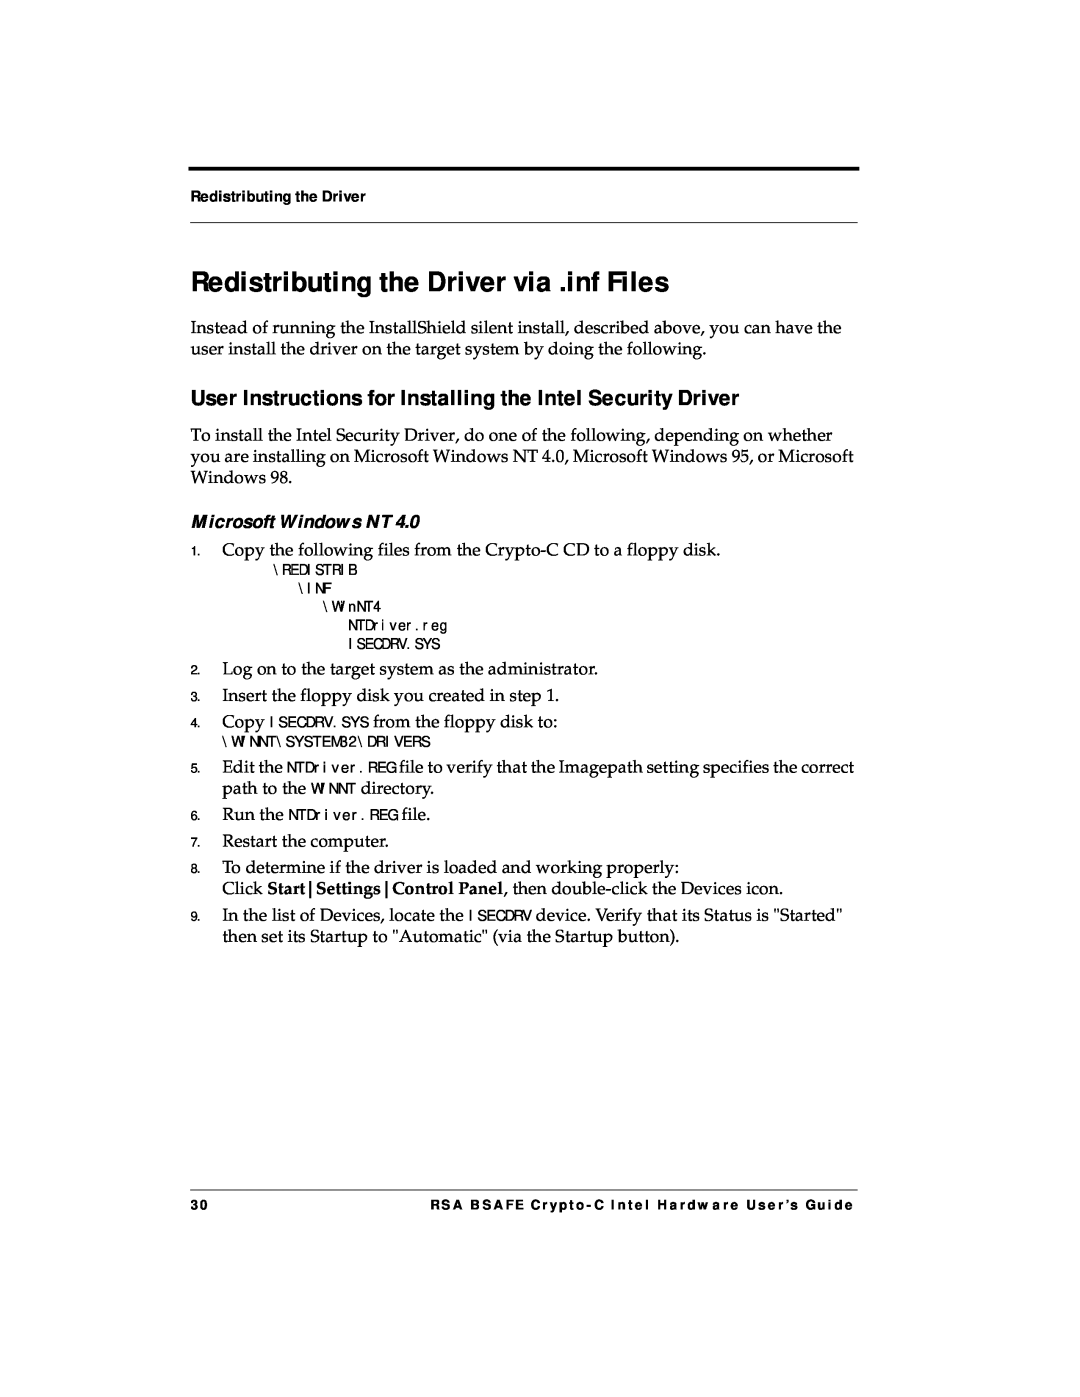 RSA Security 4.3 manual Redistributing the Driver via .inf Files, Microsoft Windows NT 